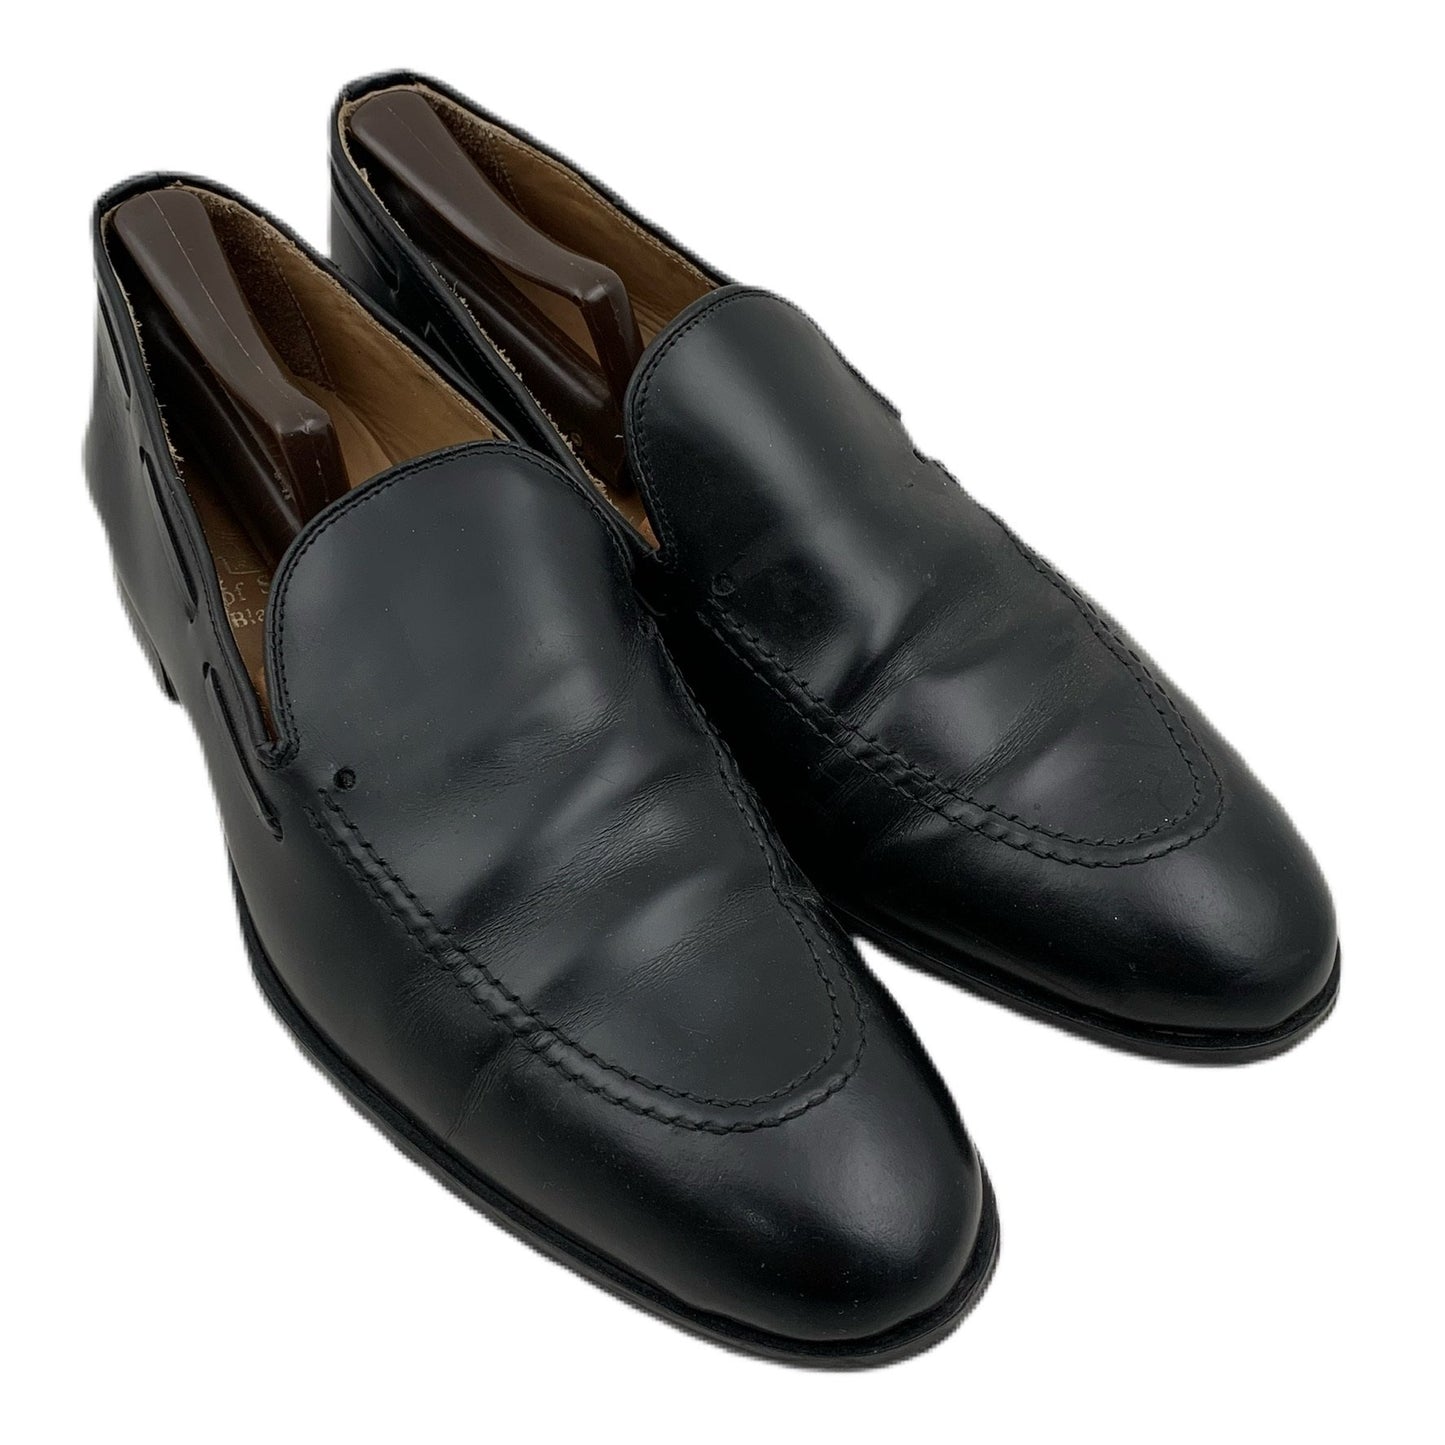 Schuhe Saxone of Scotland Mokassinschuhe aus Leder 9,5 UK